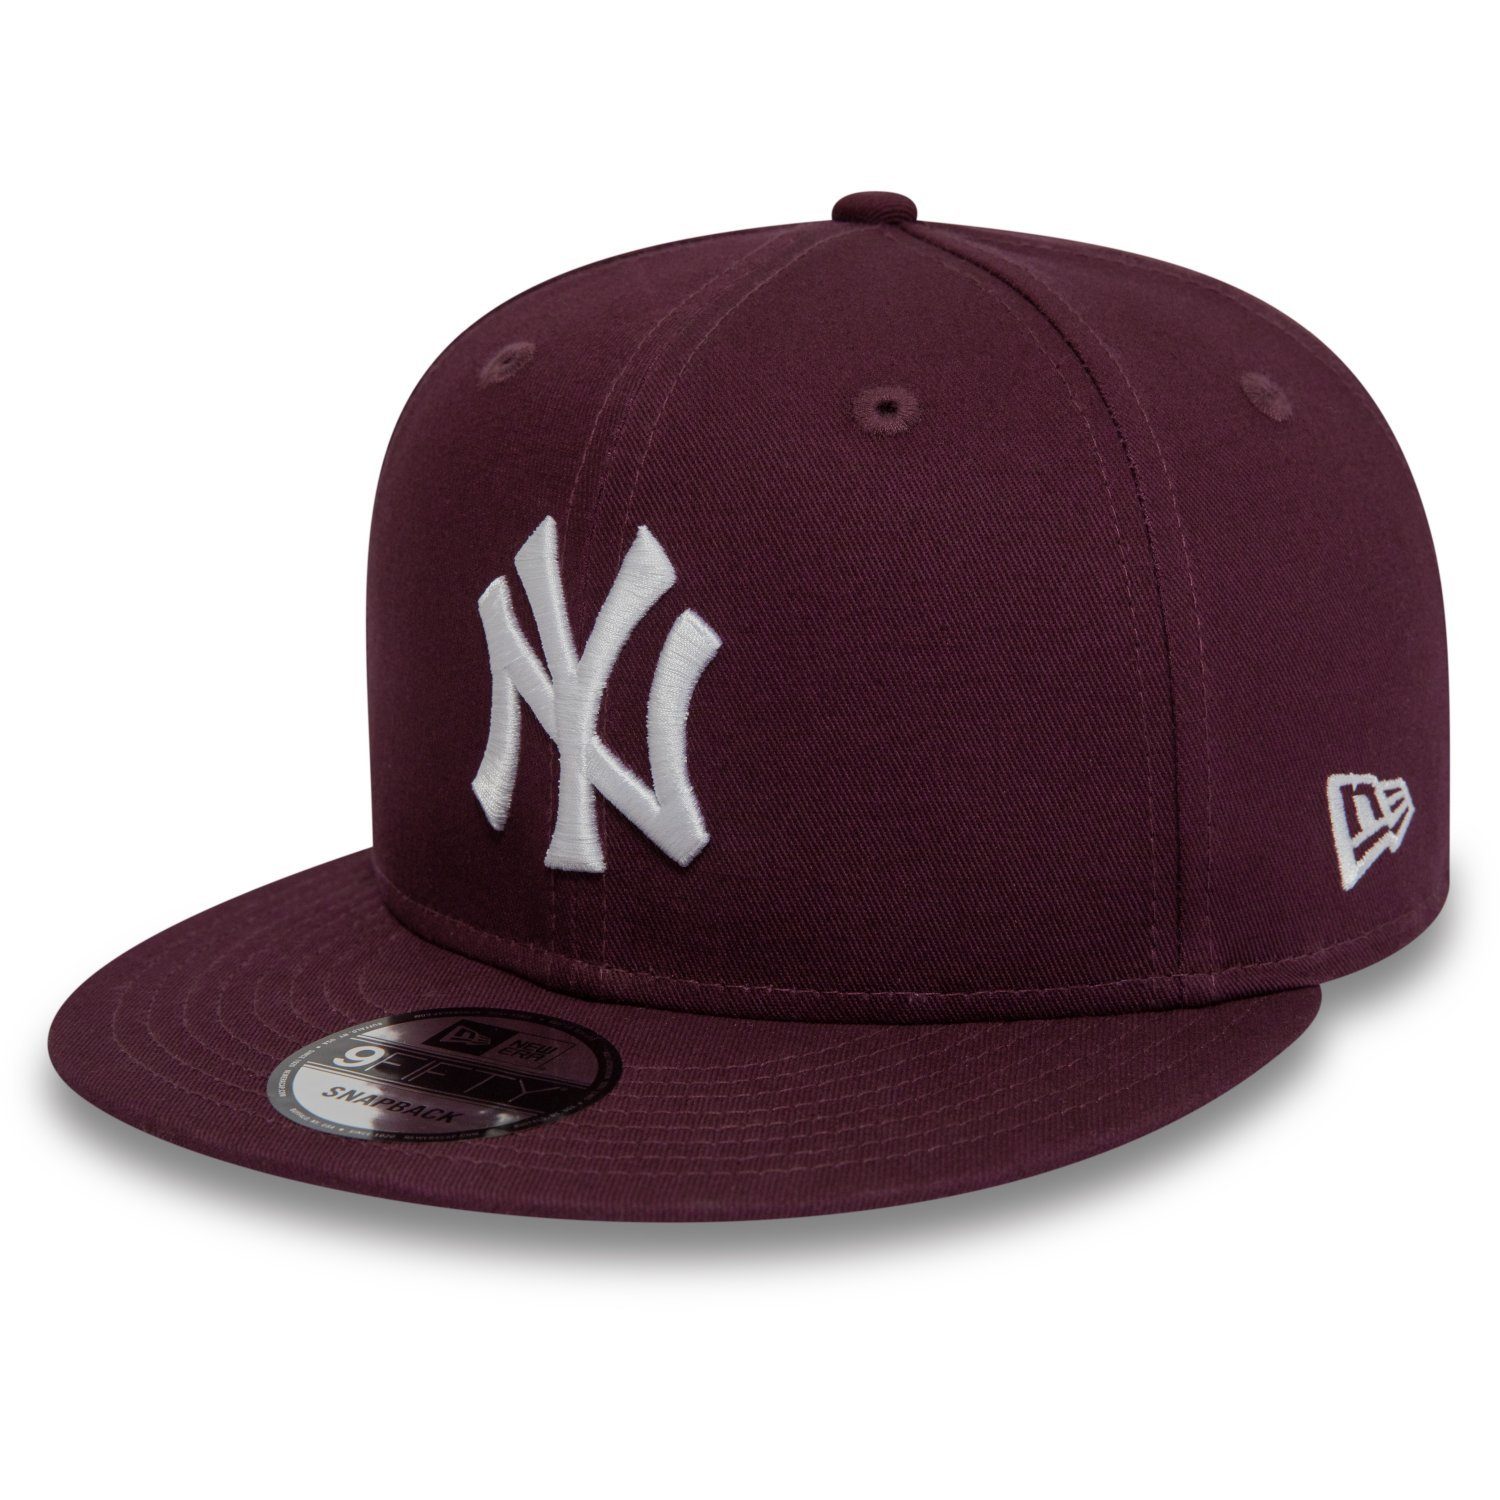 New Era Yankees New 9Fifty Snapback Cap York